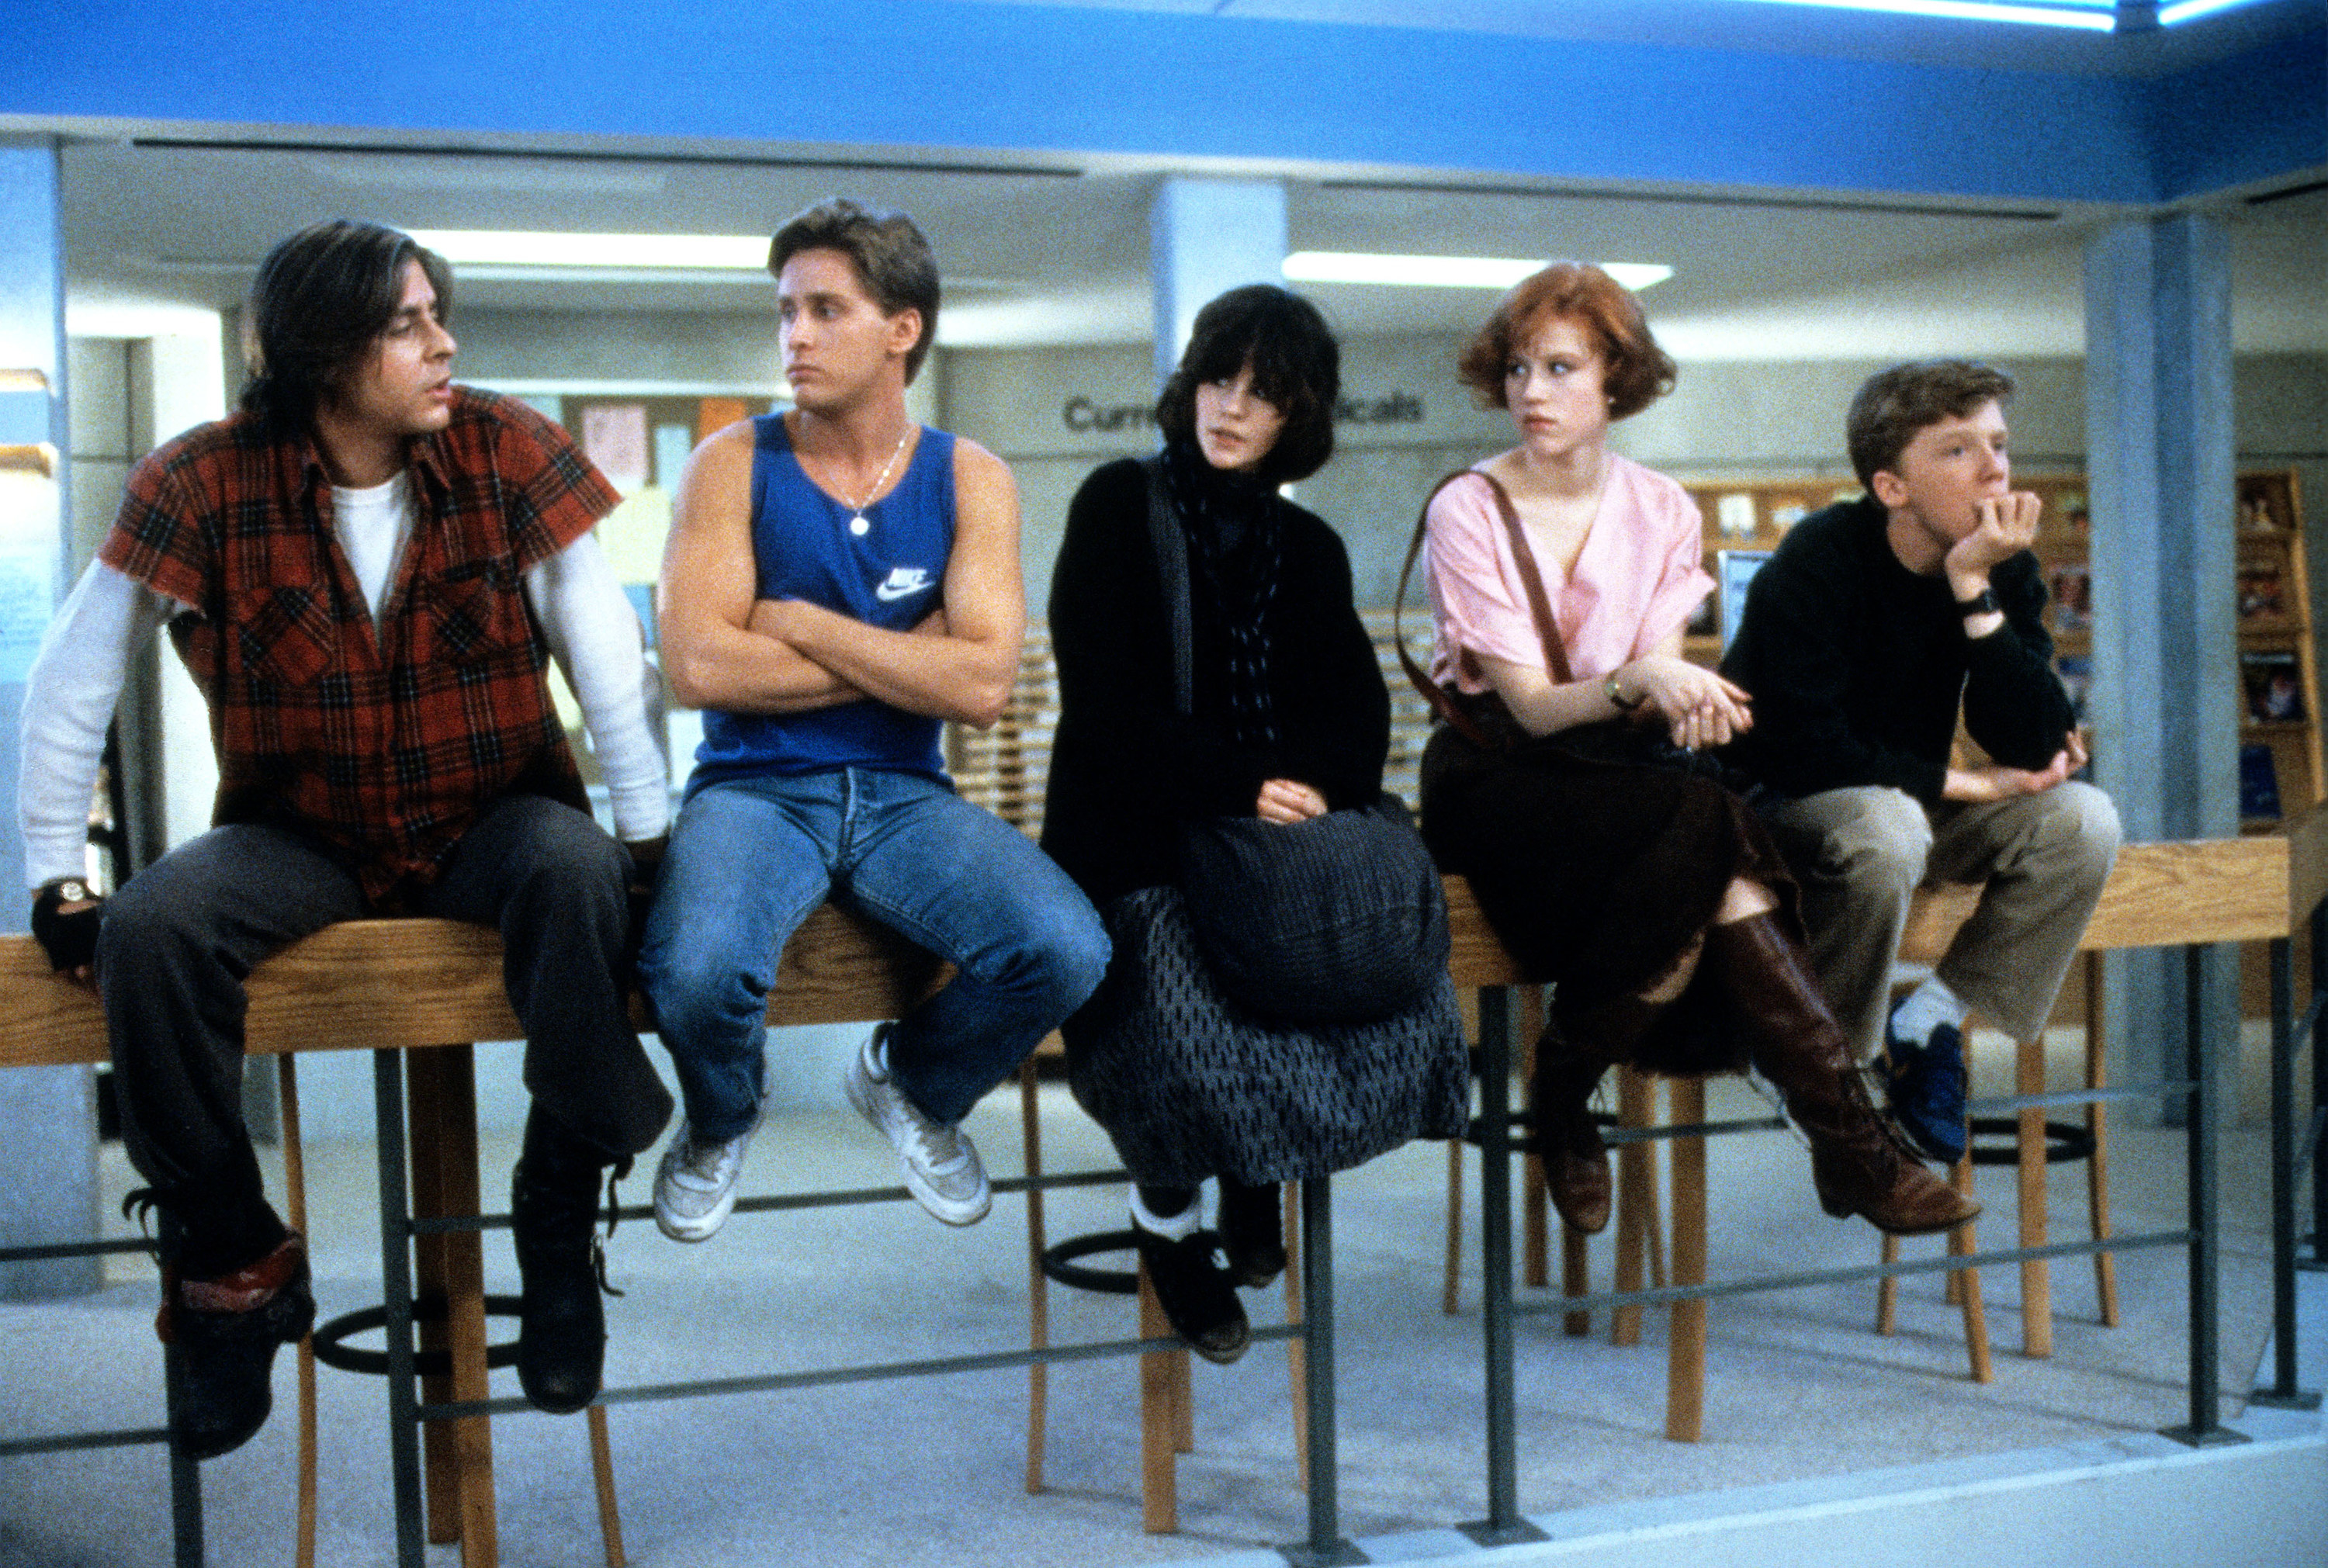 Judd Nelson, Emilio Estevez, Ally Sheedy, Molly Ringwald, and Anthony Michael Hall sitting on a bannister.